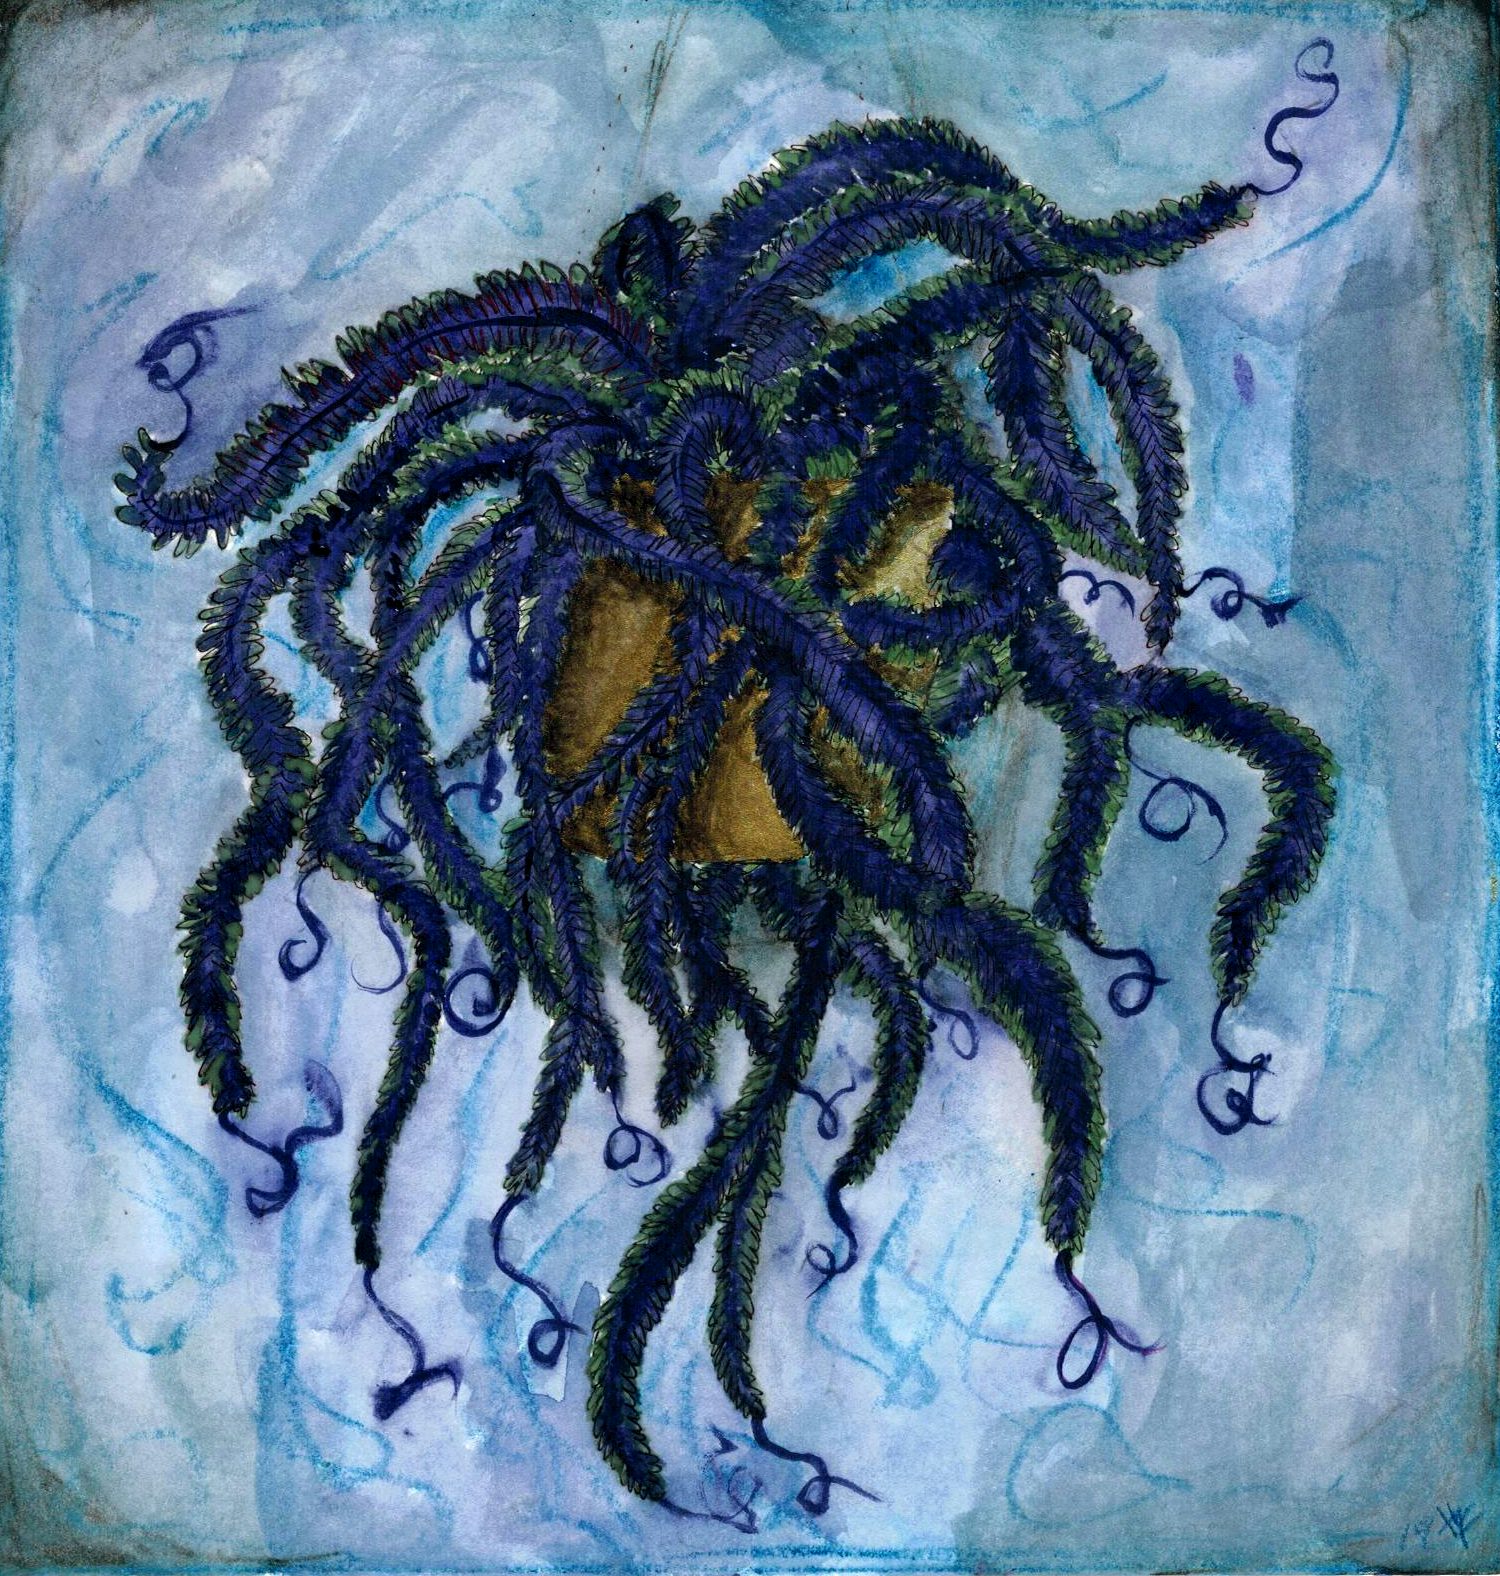 Image Description: A fern with indigo curls floats on a blue background. 